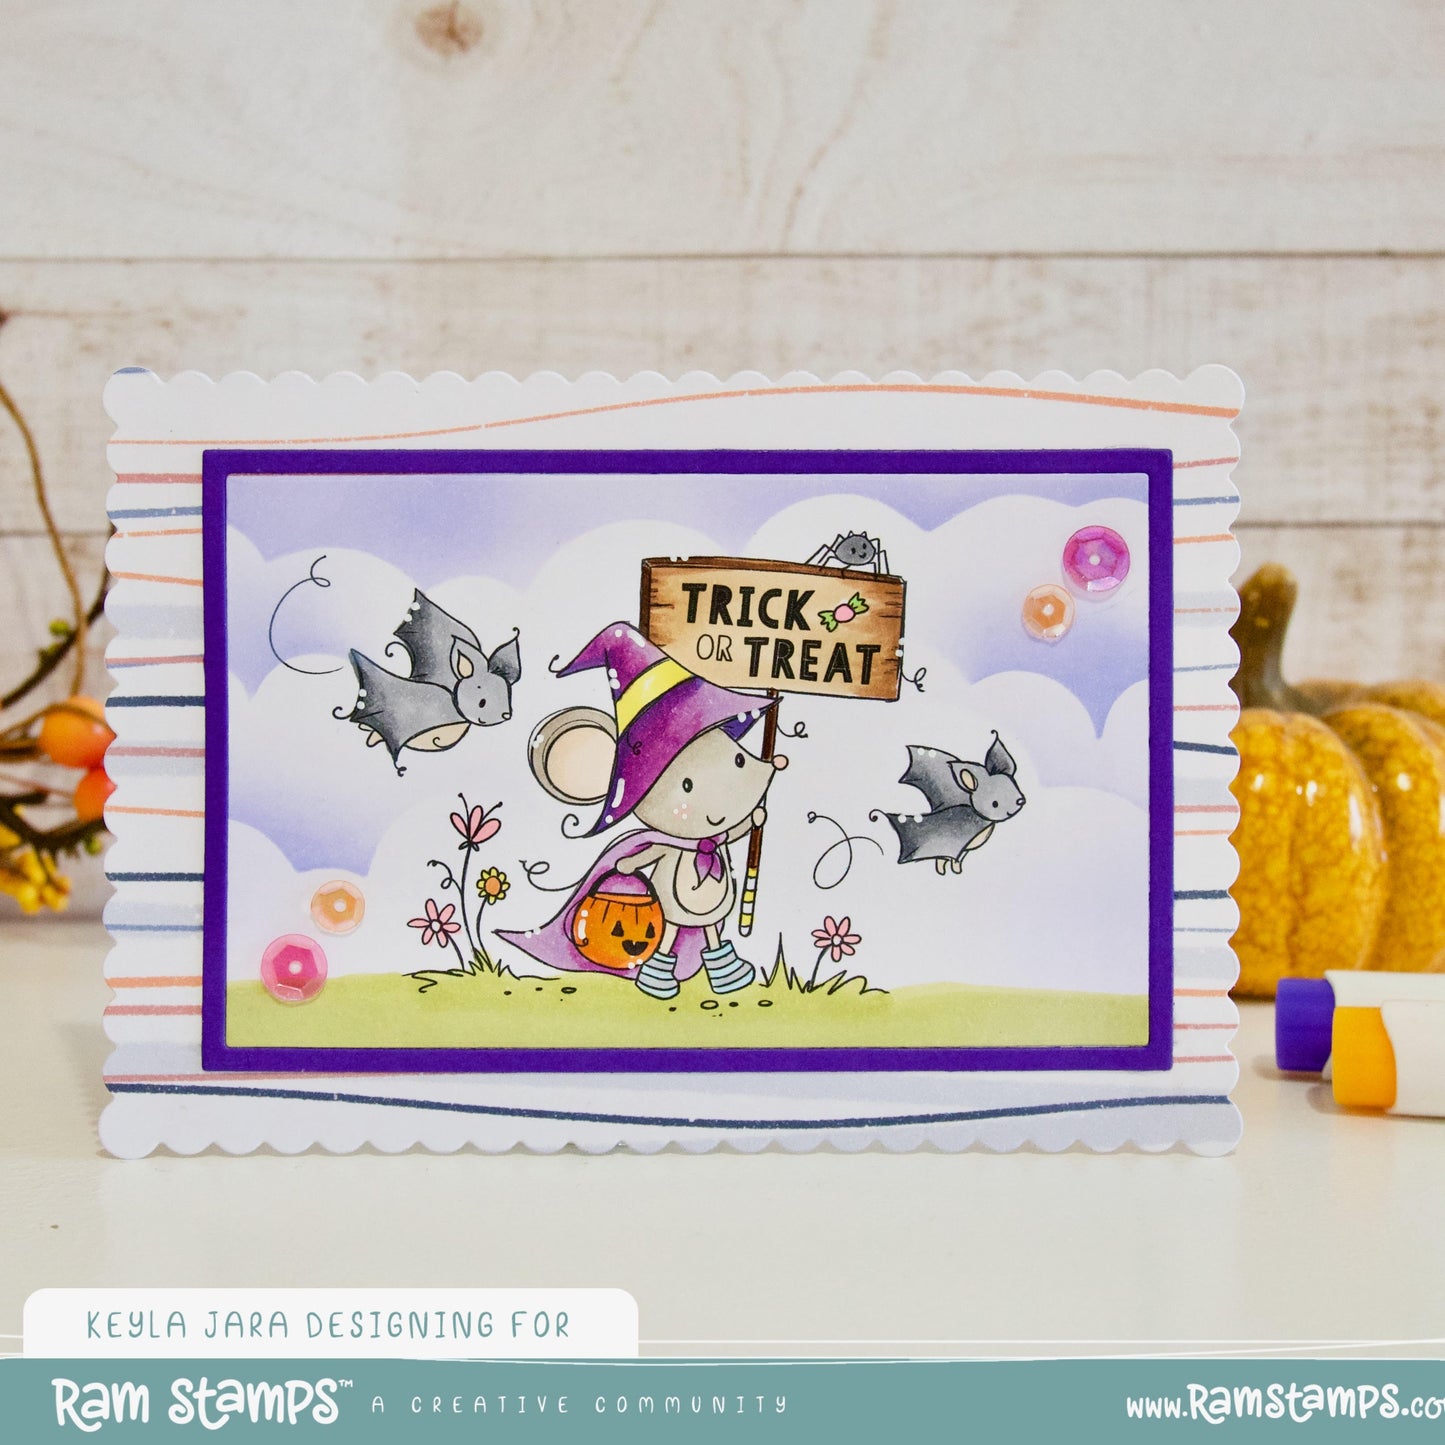 'Happy Halloween' Digital Stamp & Paper Set